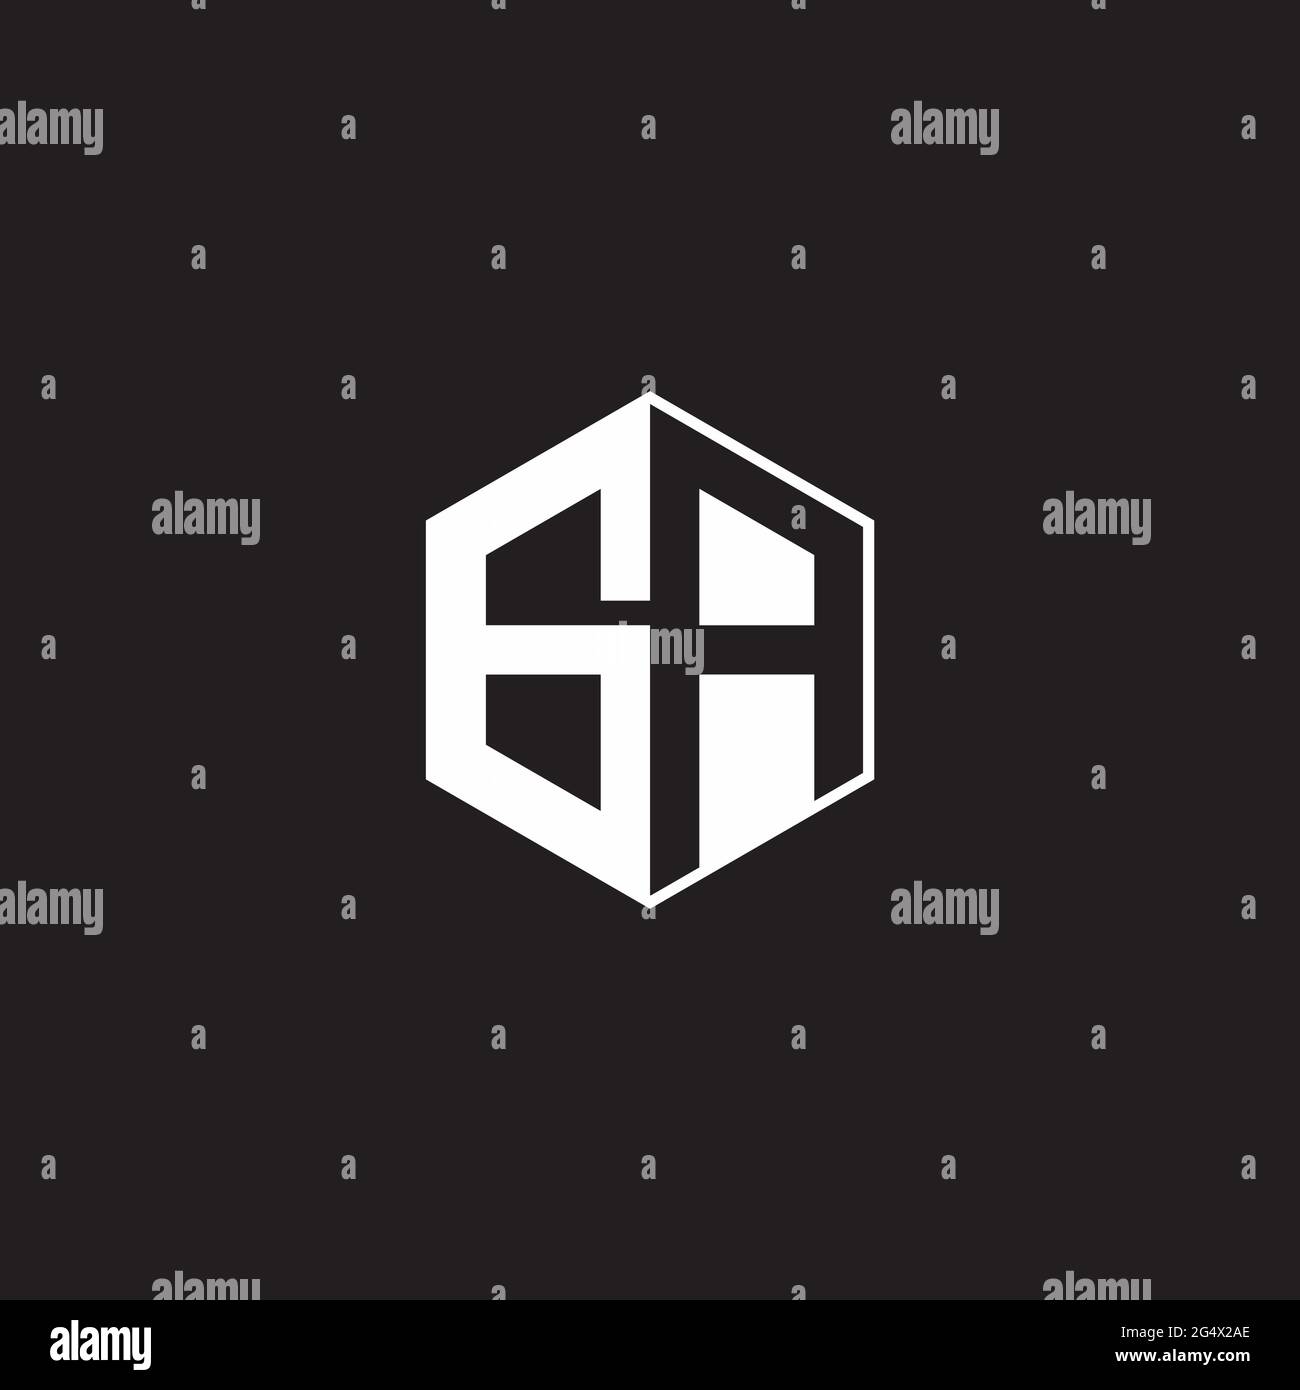 GA G A AG Logo monogram hexagon with black background negative space style Stock Vector